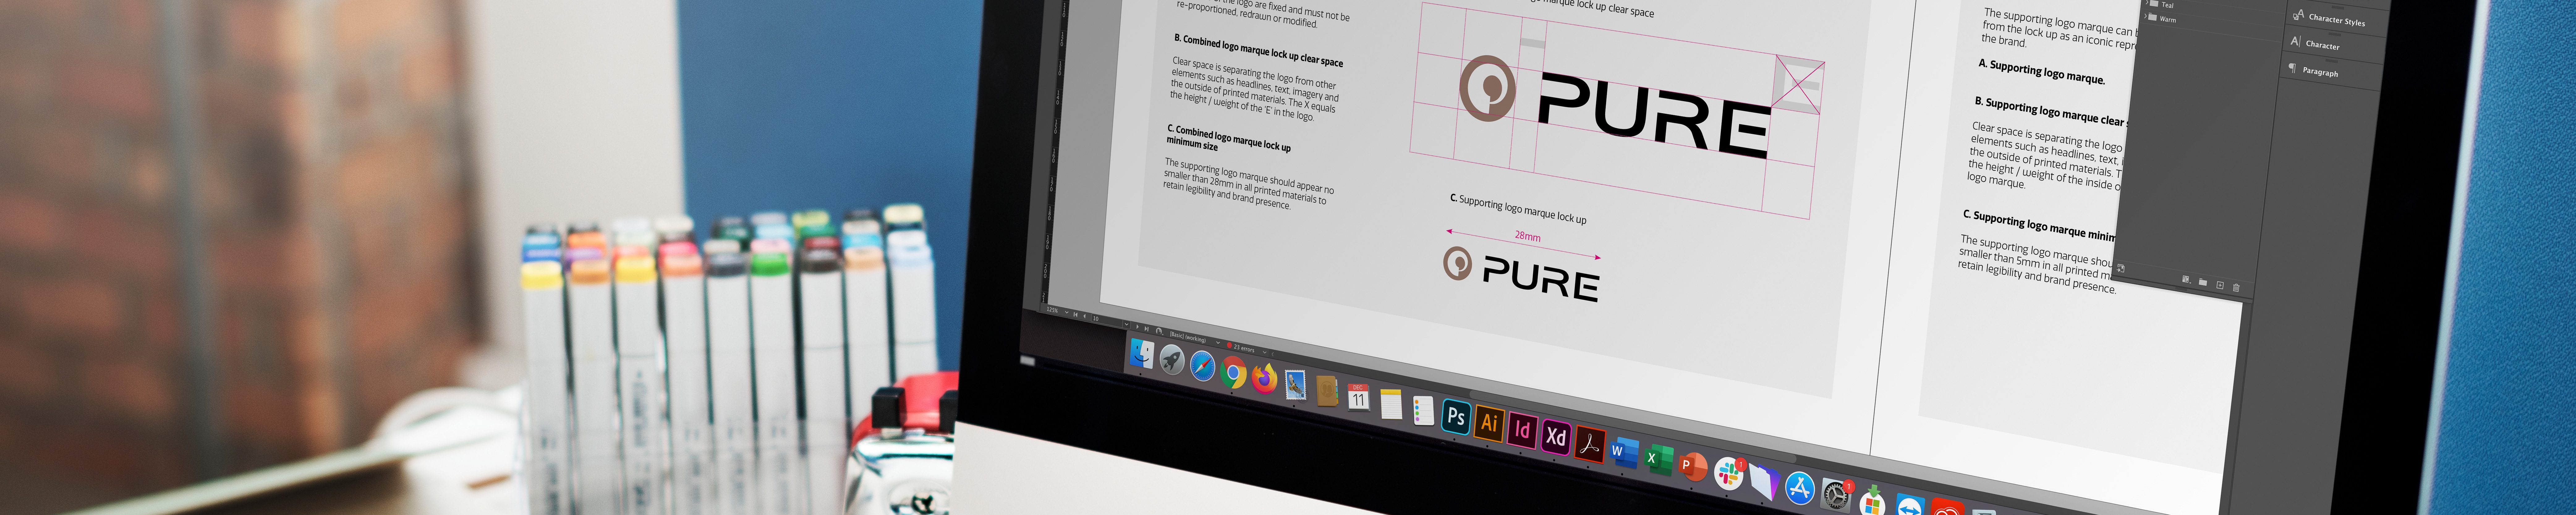 Pure Digital logo brand on iMac banner